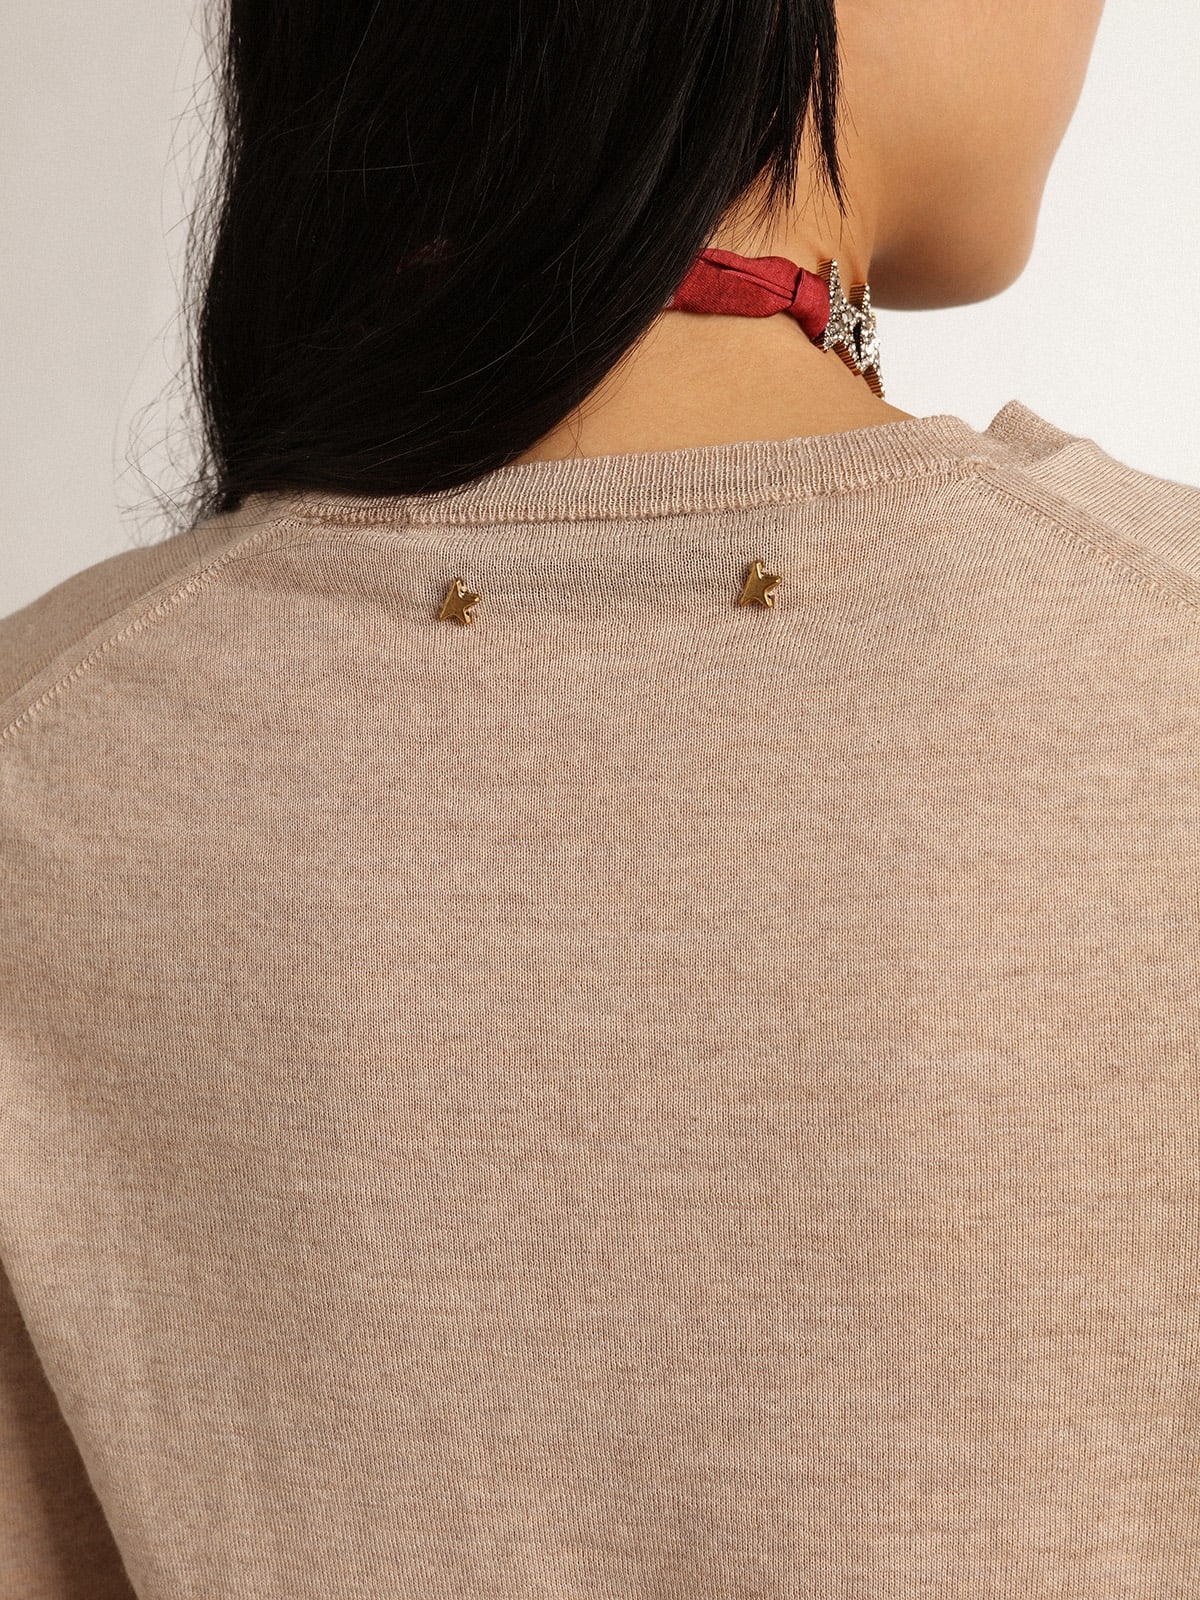 Women's sweater in light brown merino wool - 5